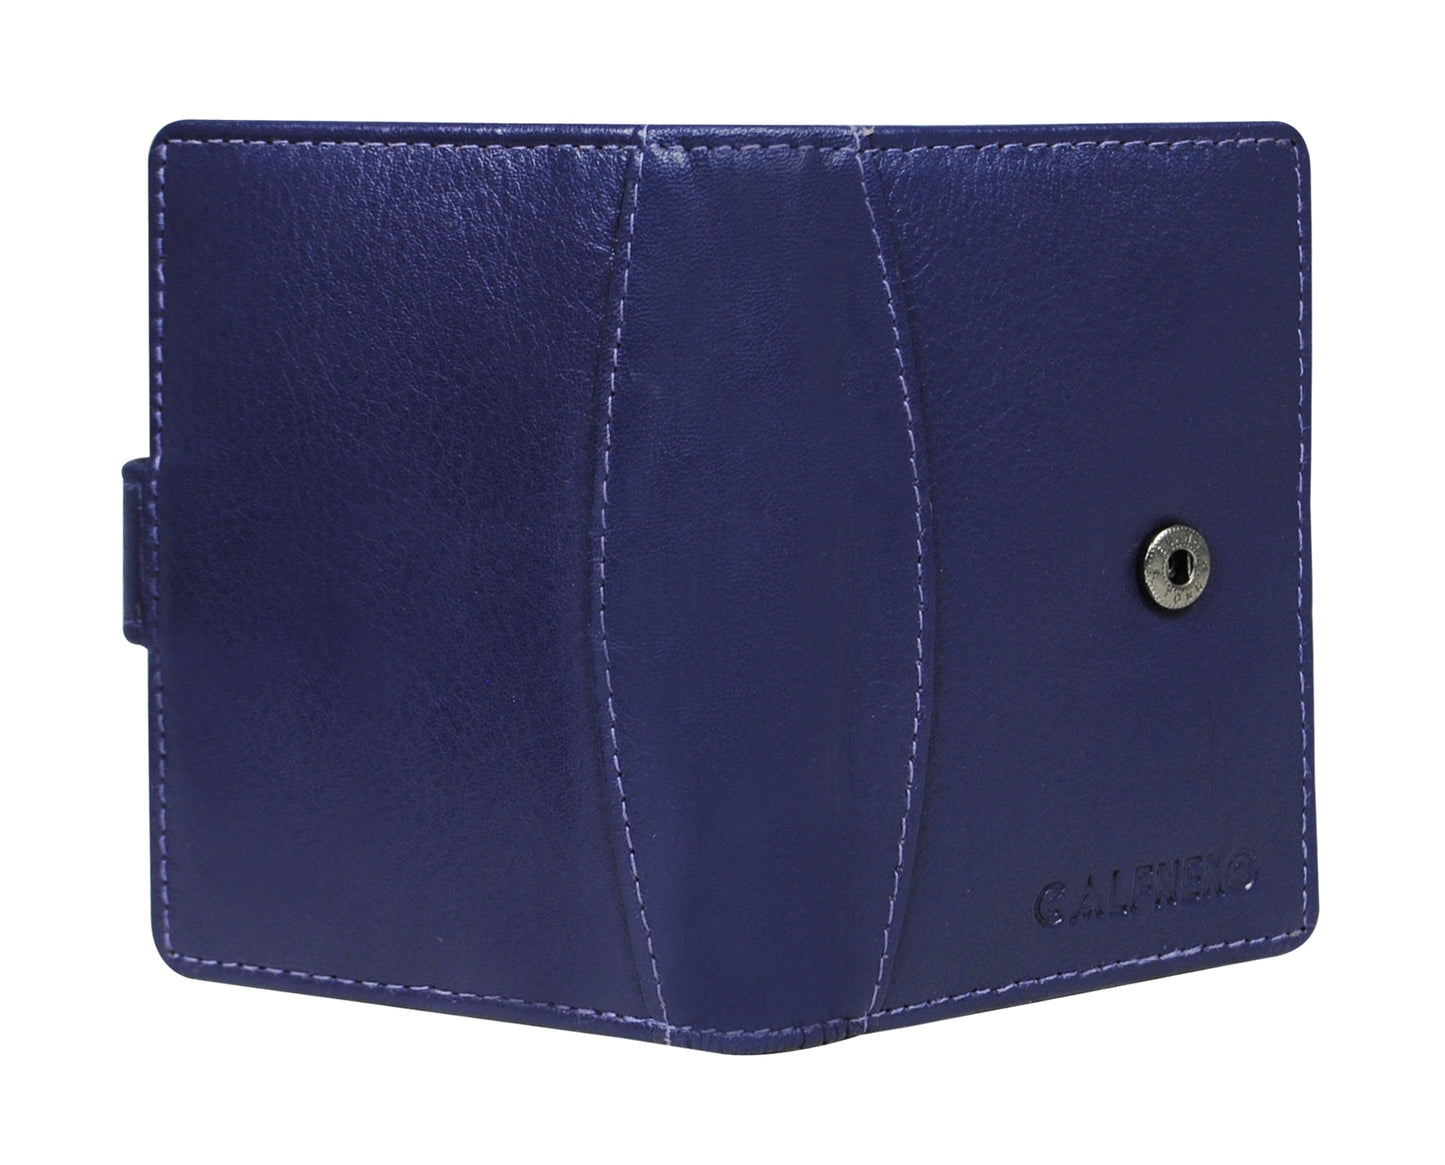 Calfnero Genuine Leather Card Case wallet (602-Purple)